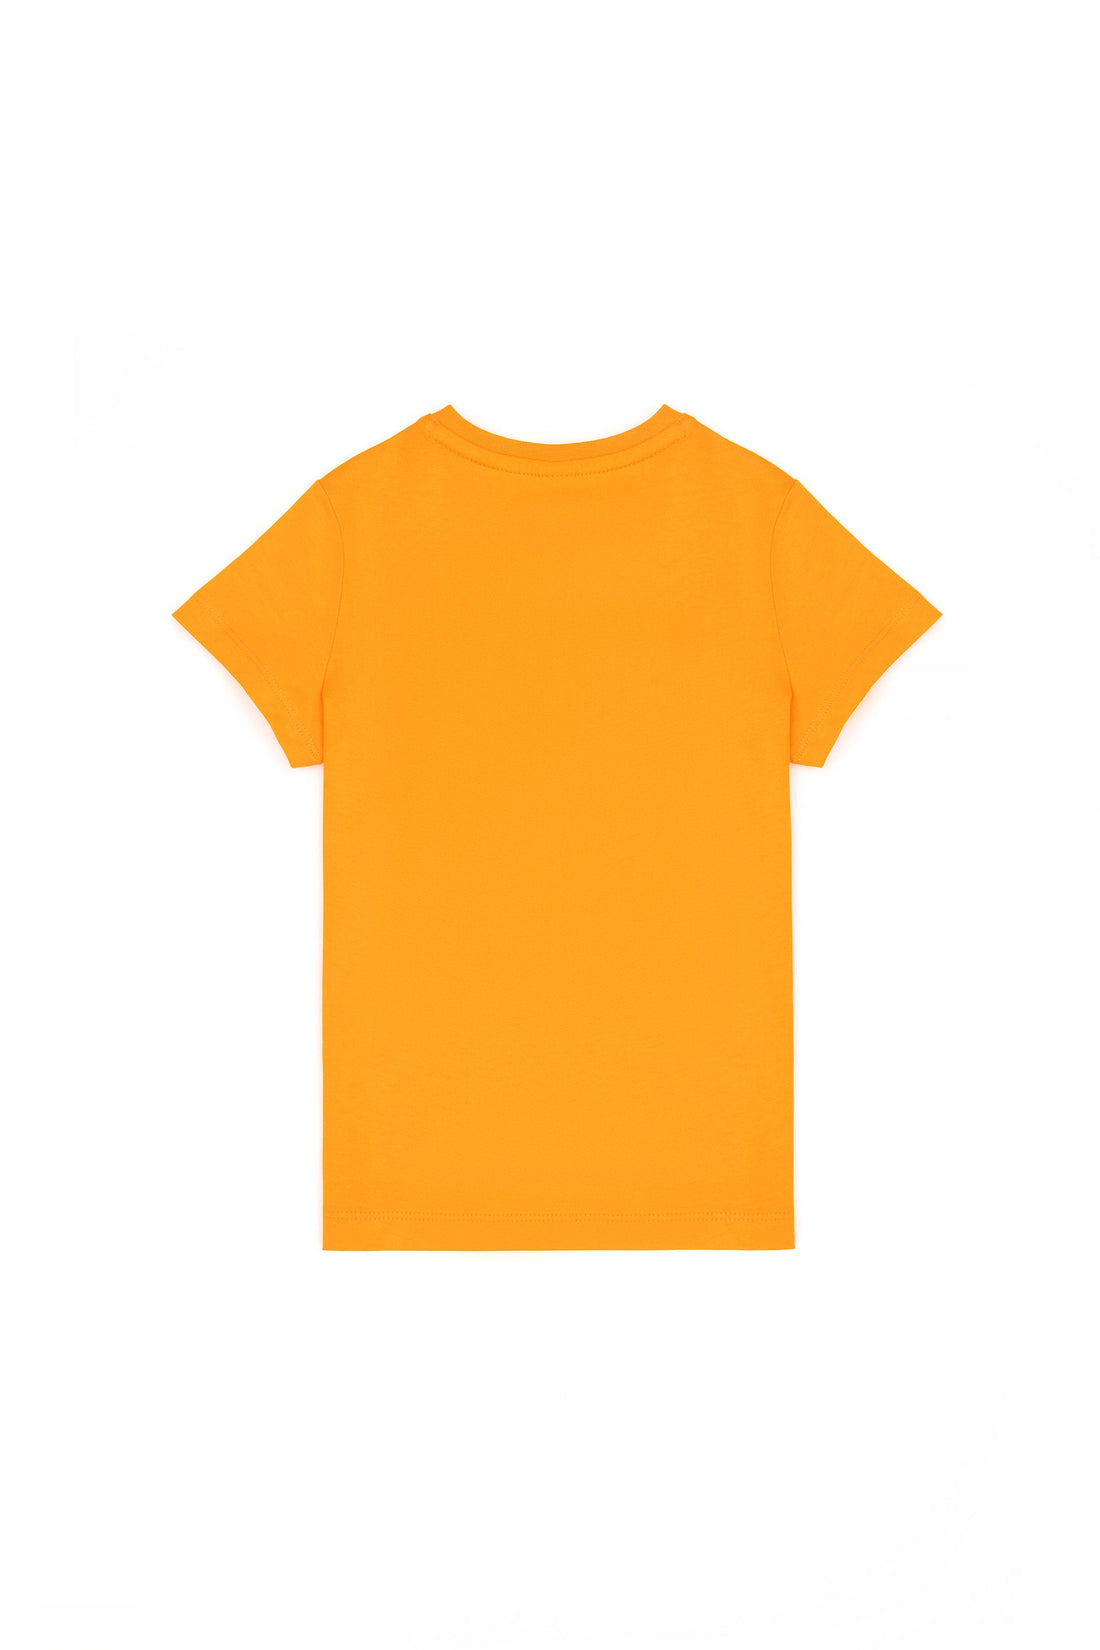 Boys Orange T-Shirt_G083SZ0110 1795027_VR051_02